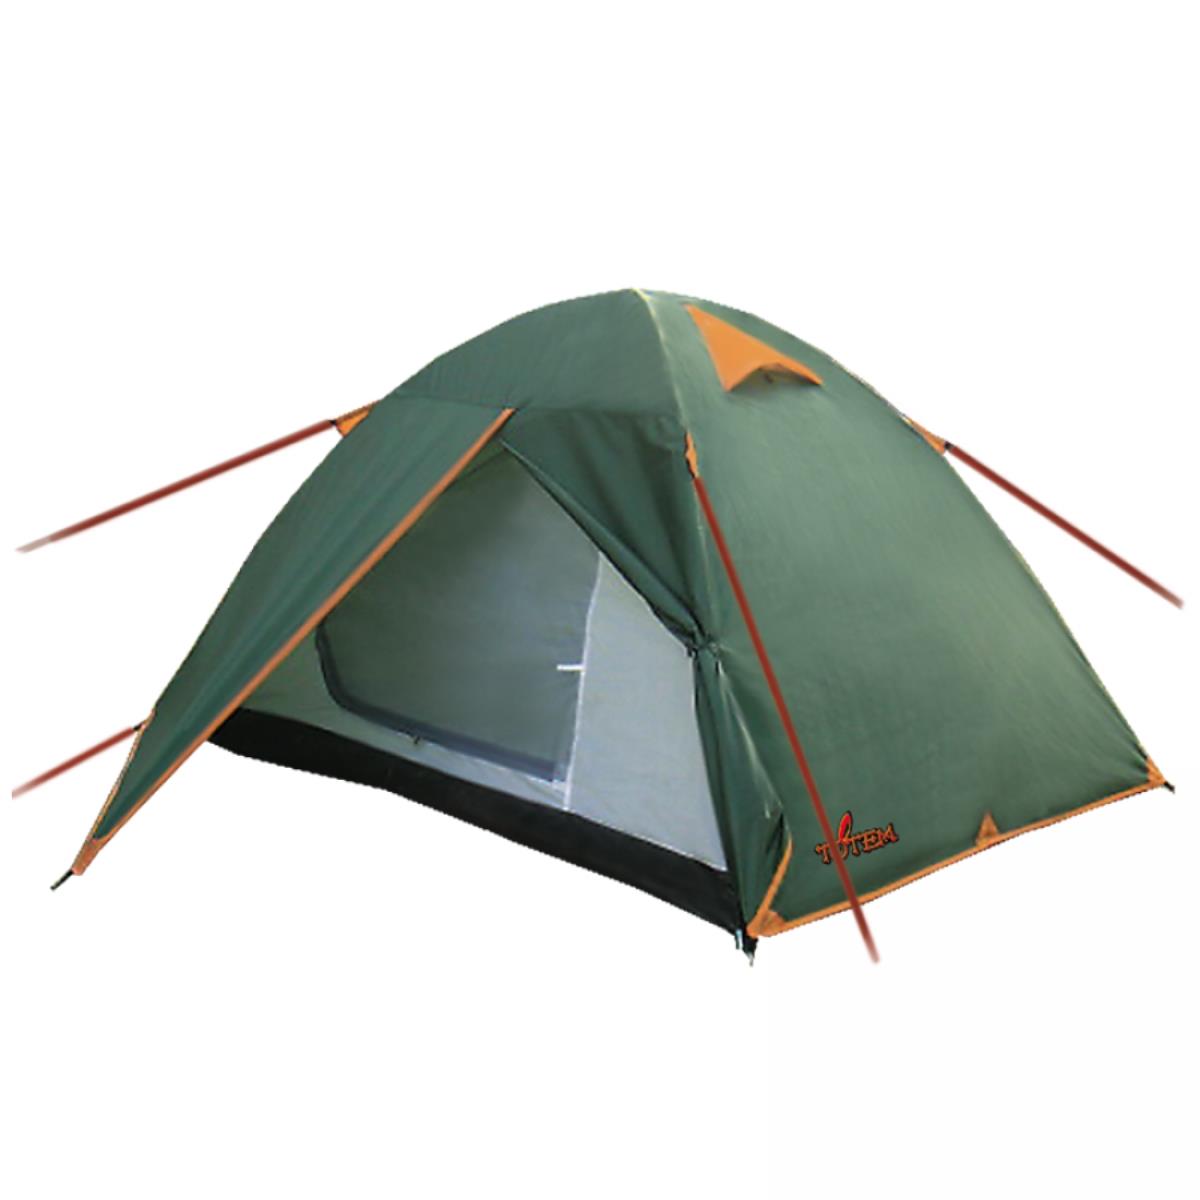 Палатка Tepee 2 V2 зеленый (TTT-020) Totem палатка catawba 4 v2 зеленый ttt 024 totem